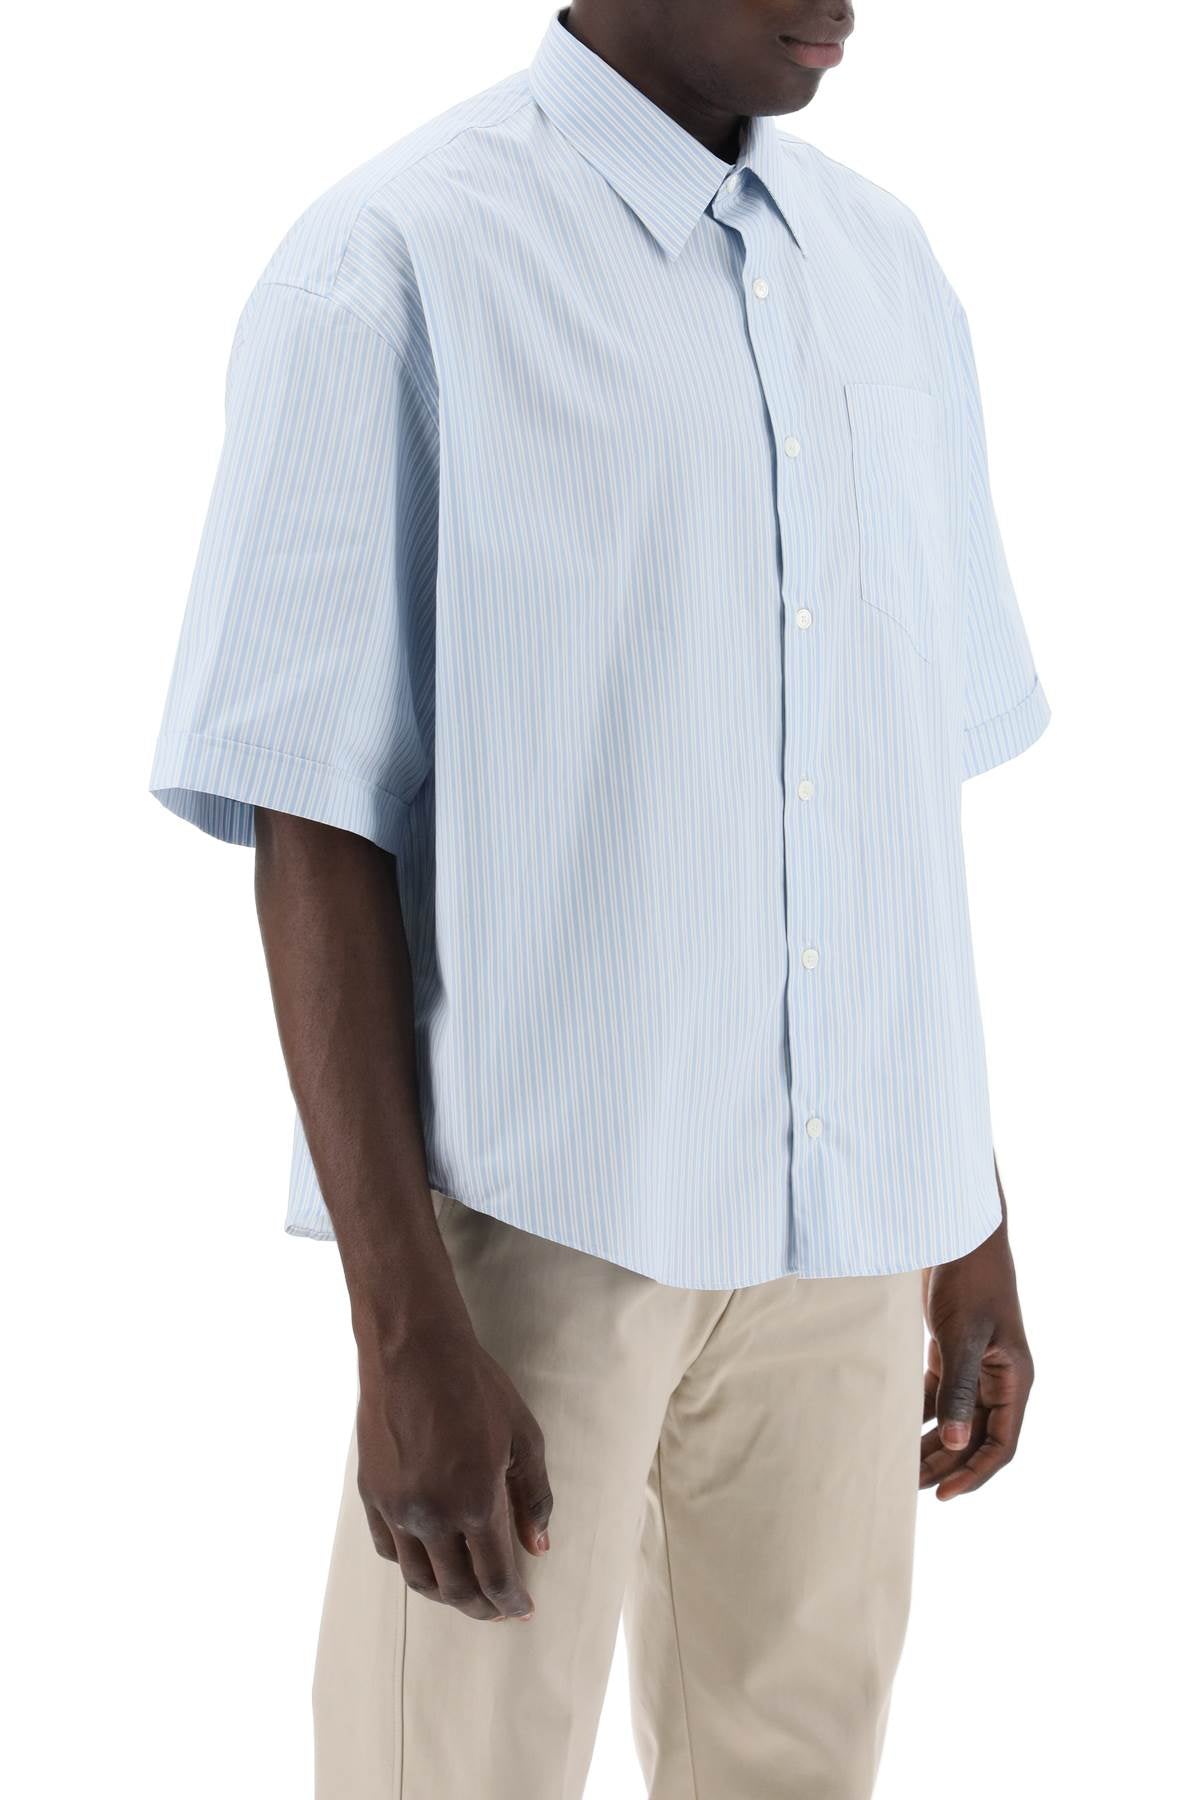 Ami paris short-sleeved striped shirt-1